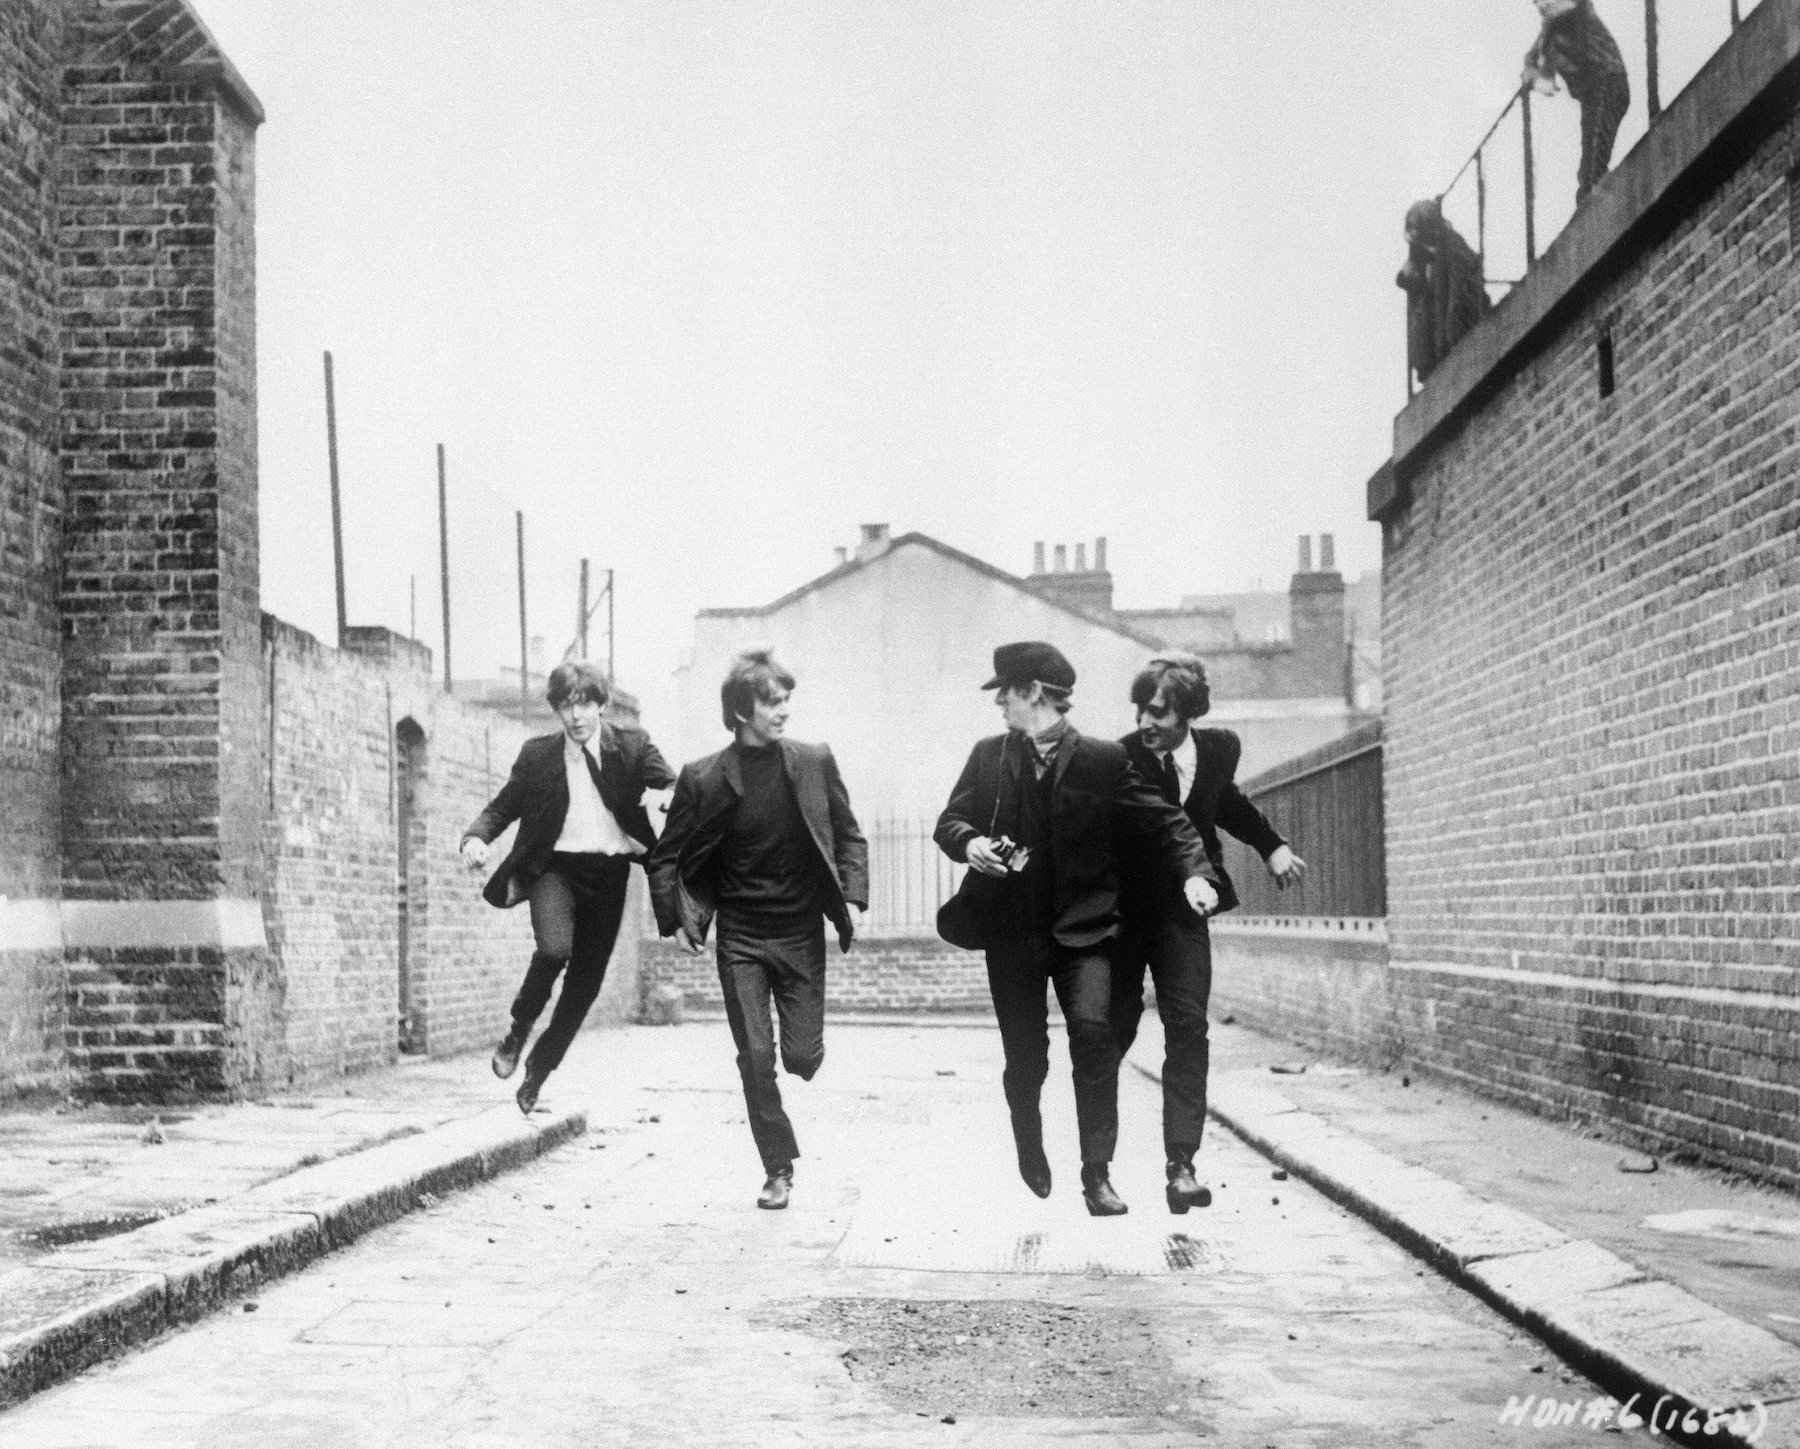 From left to right, Paul McCartney, George Harrison, John Lennon, and Ringo Starr run down an empty London street